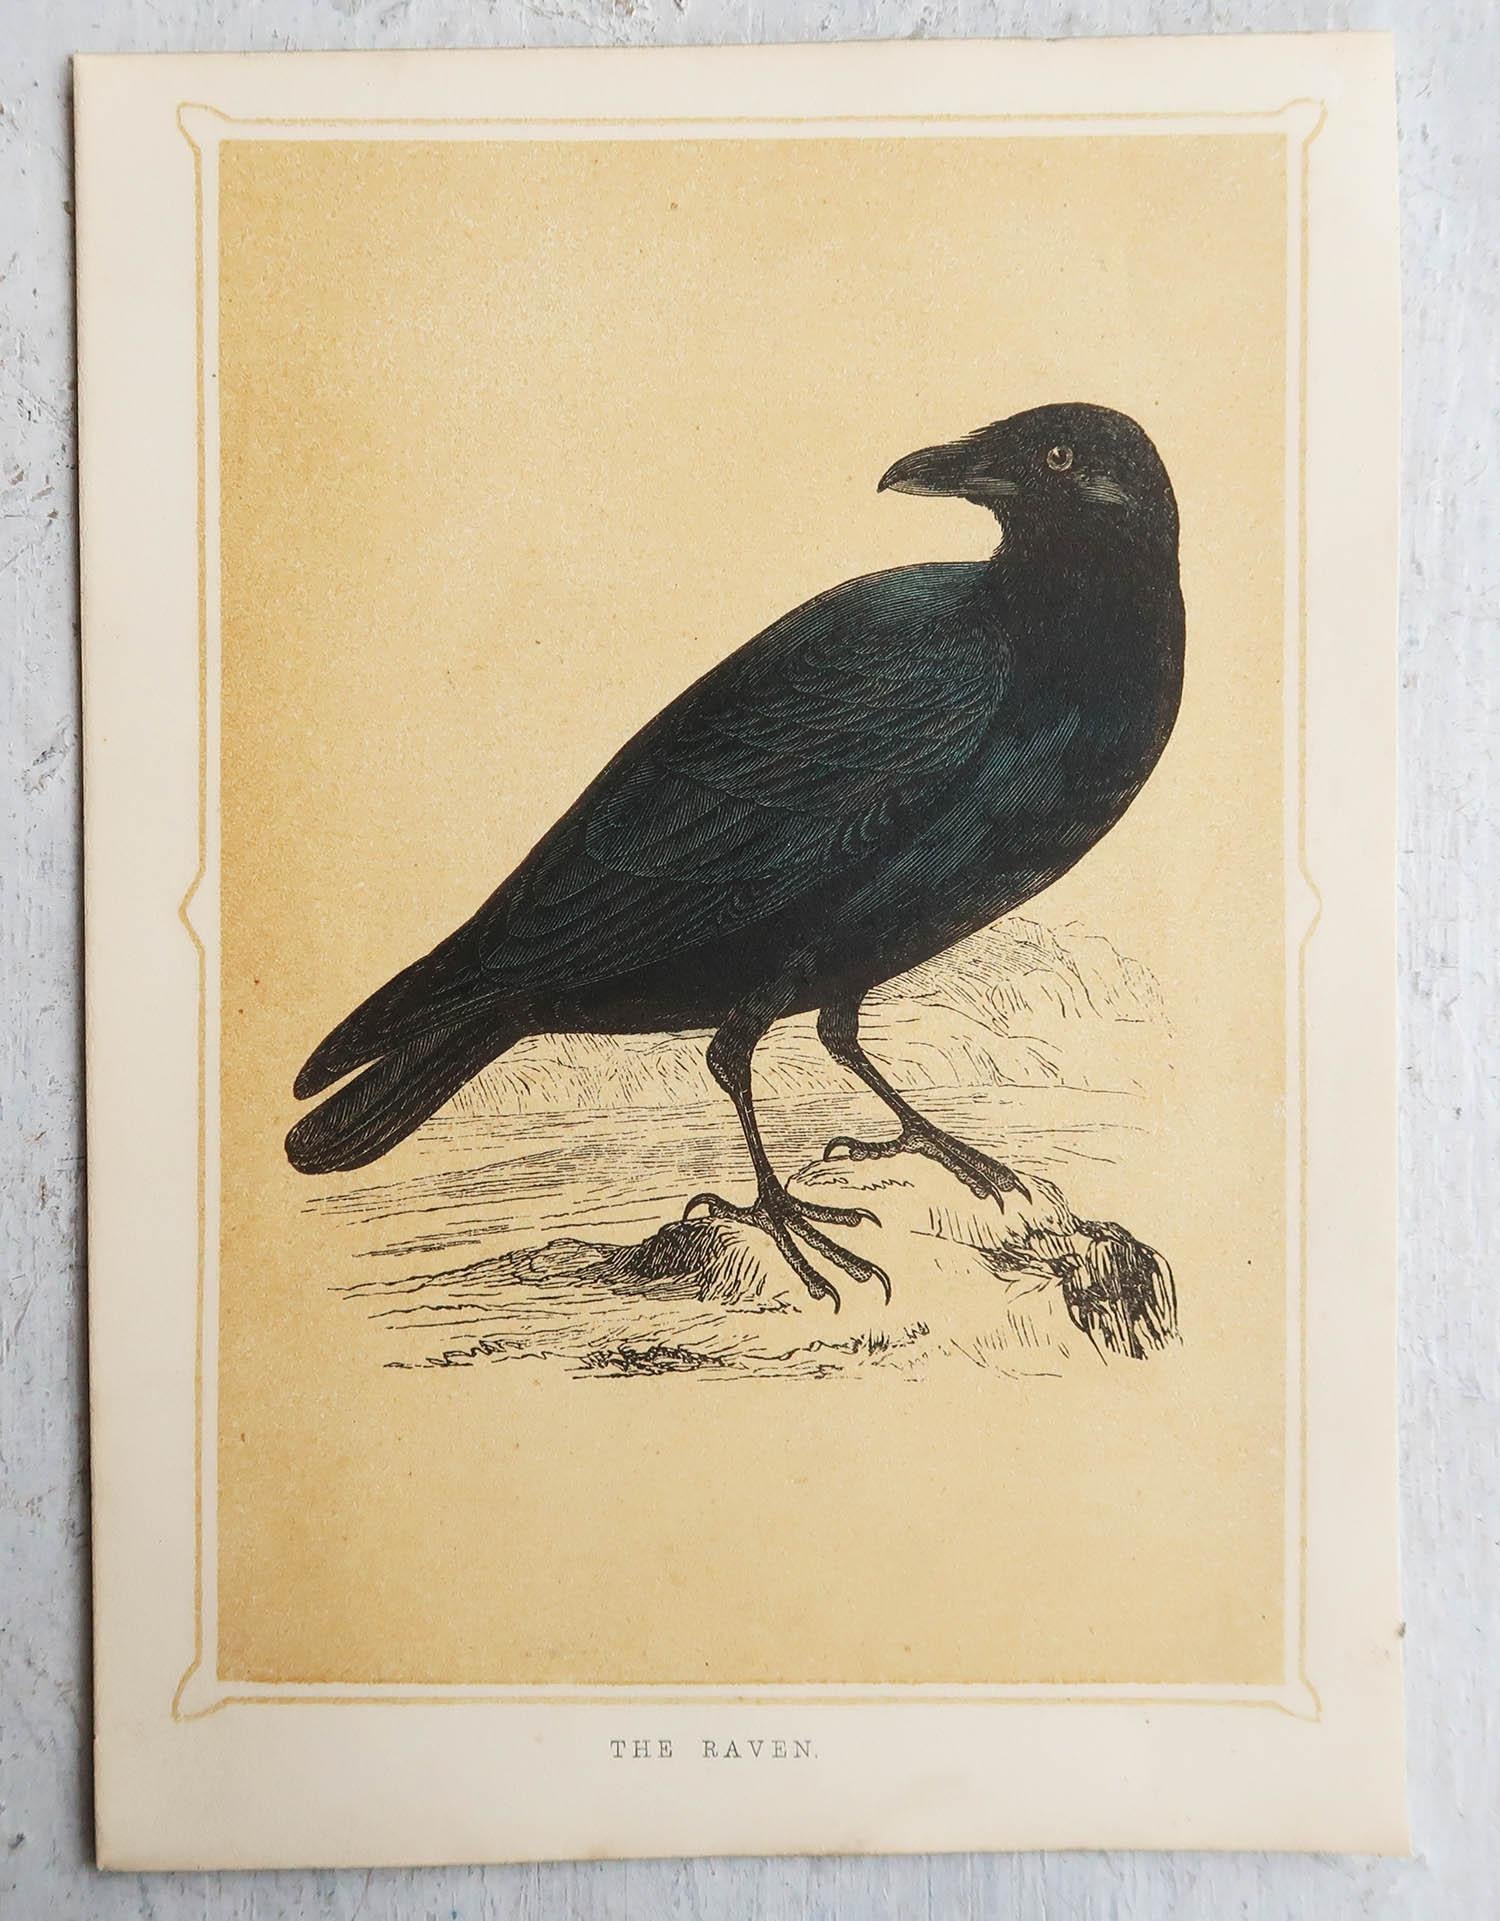 Victorian  Original Antique Print of A Raven, circa 1850